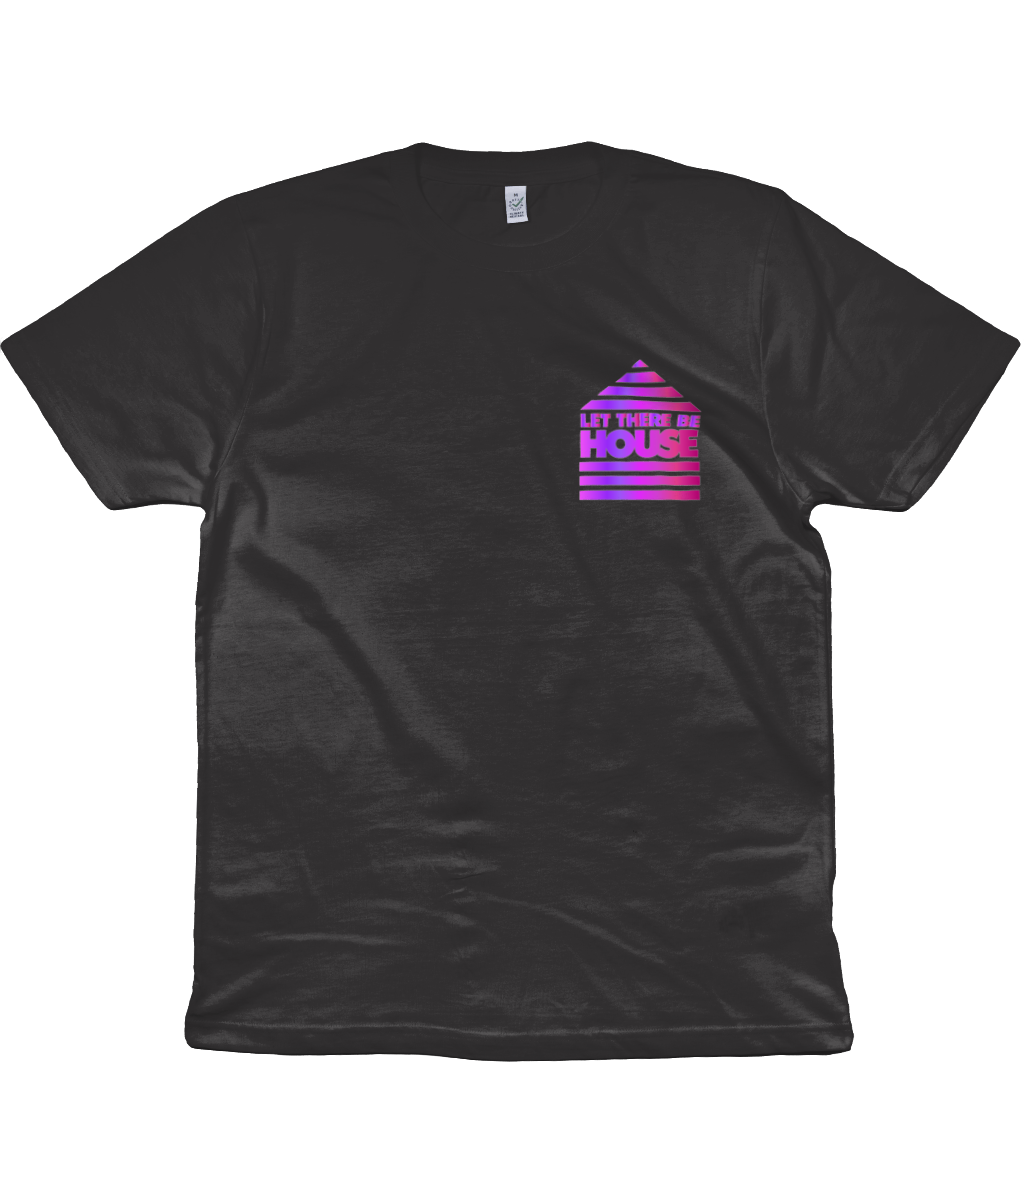 T-Shirt LTBH Neon